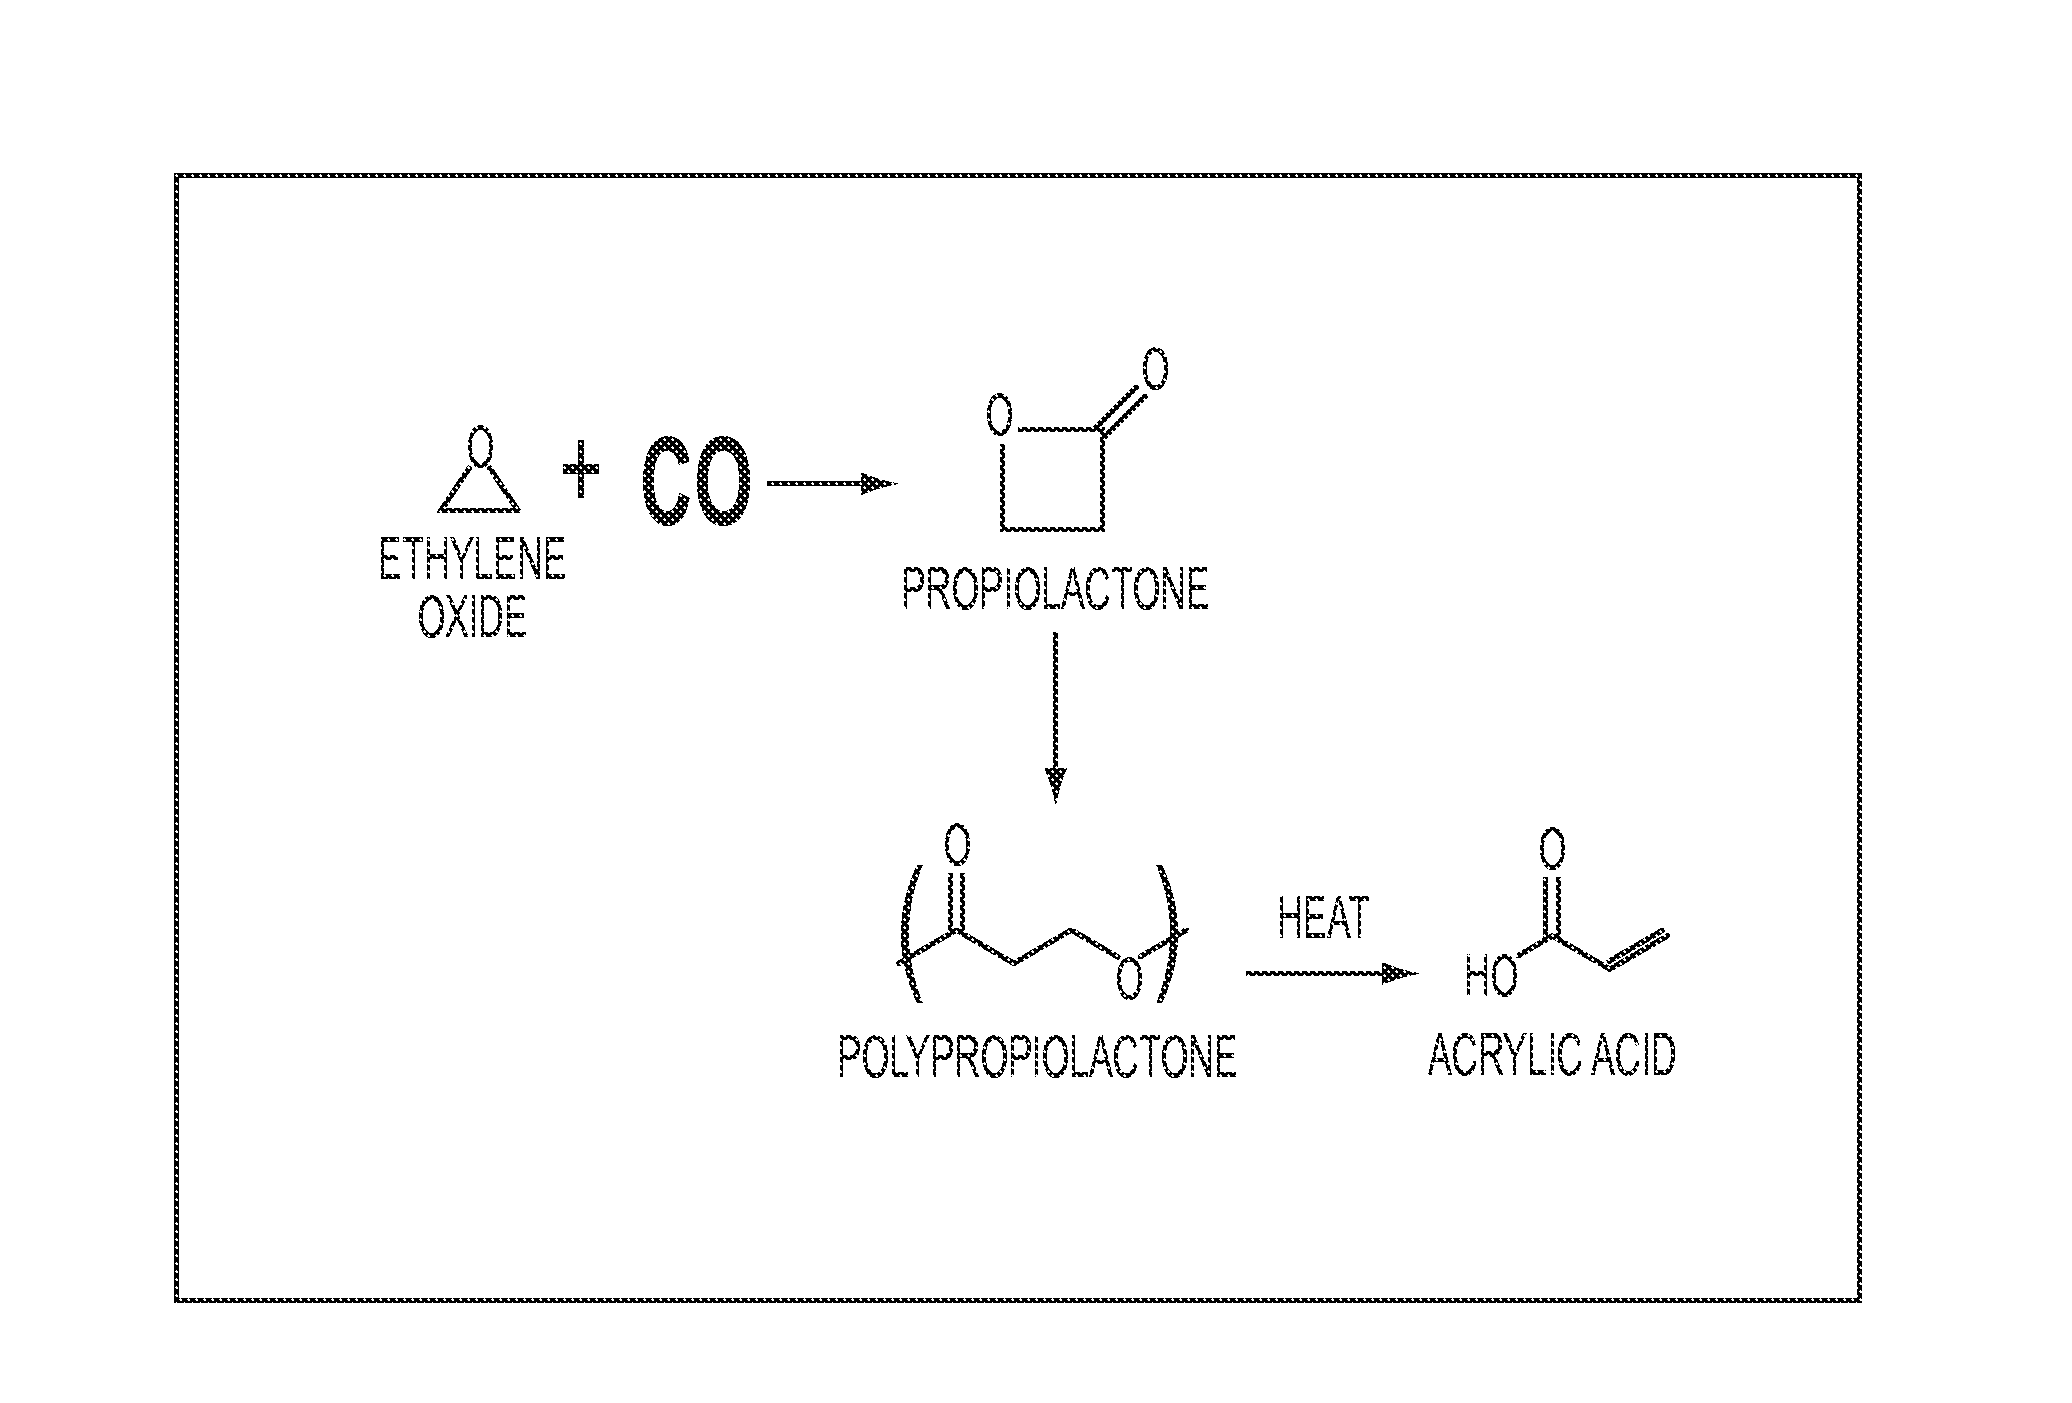 Acrylic acid production methods